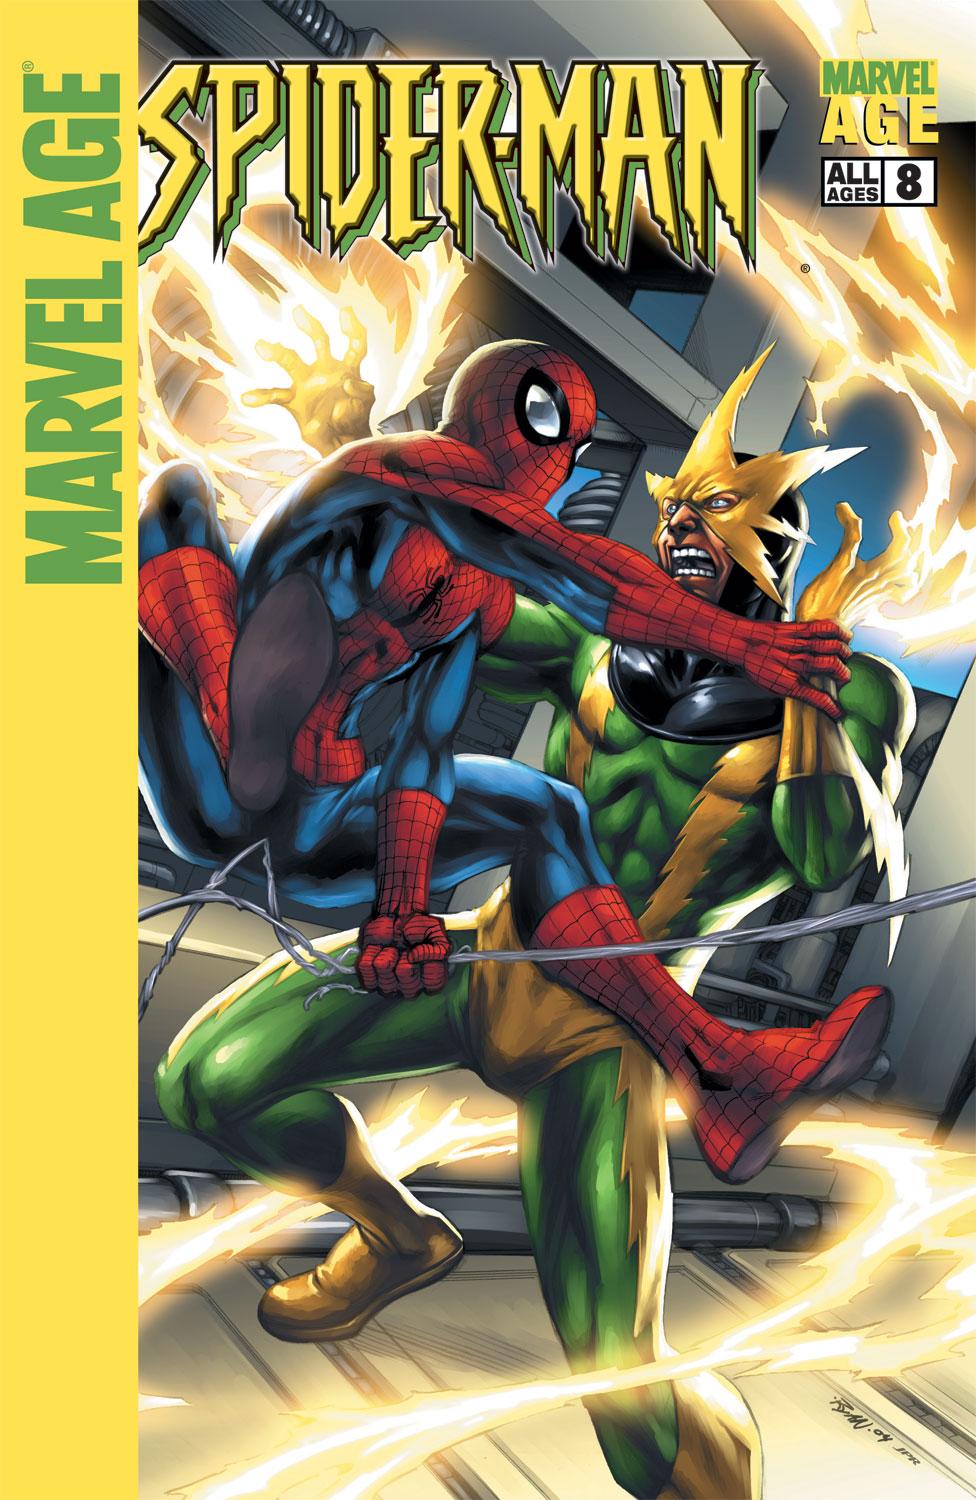 Marvel Age Spider-Man (2004) #8